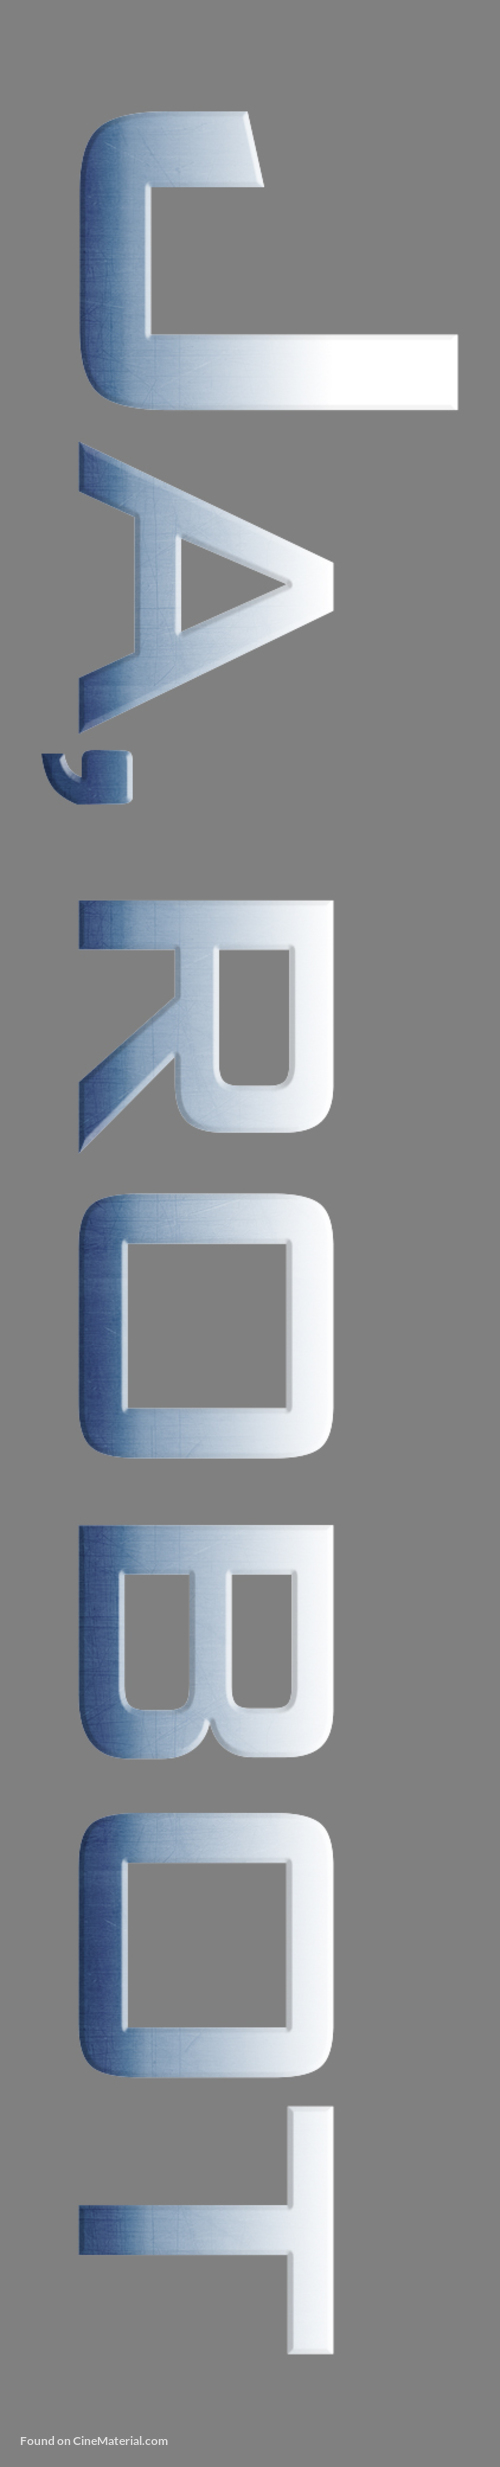 I, Robot - Polish Logo